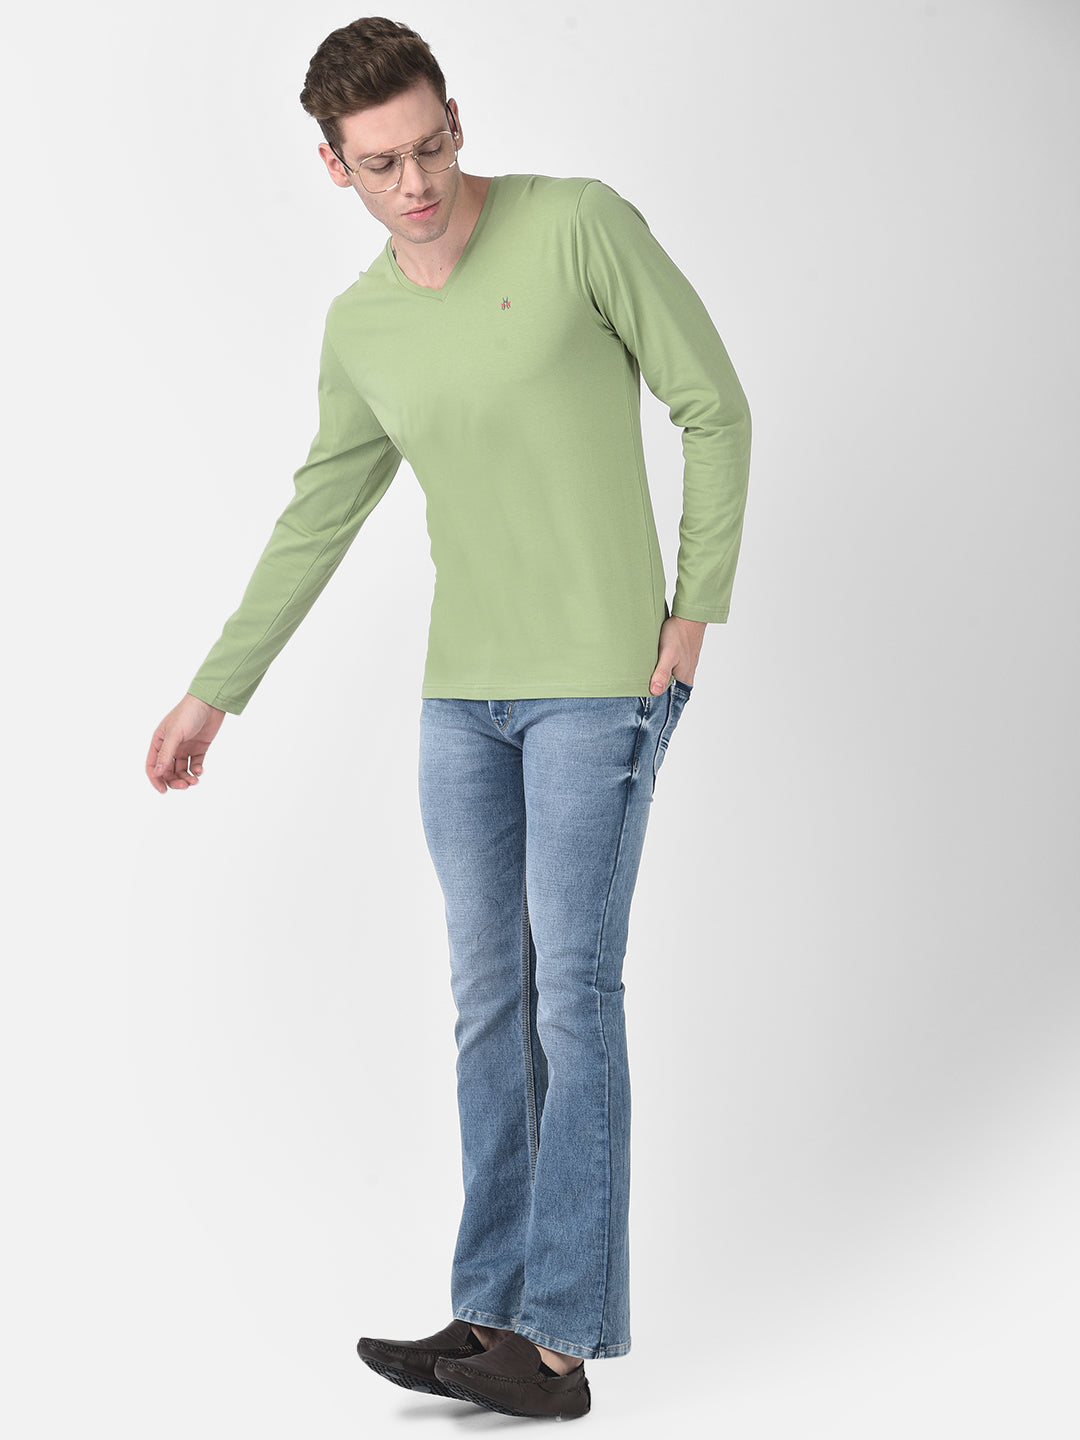 Long-Sleeved Green T-Shirt-Men T-Shirts-Crimsoune Club